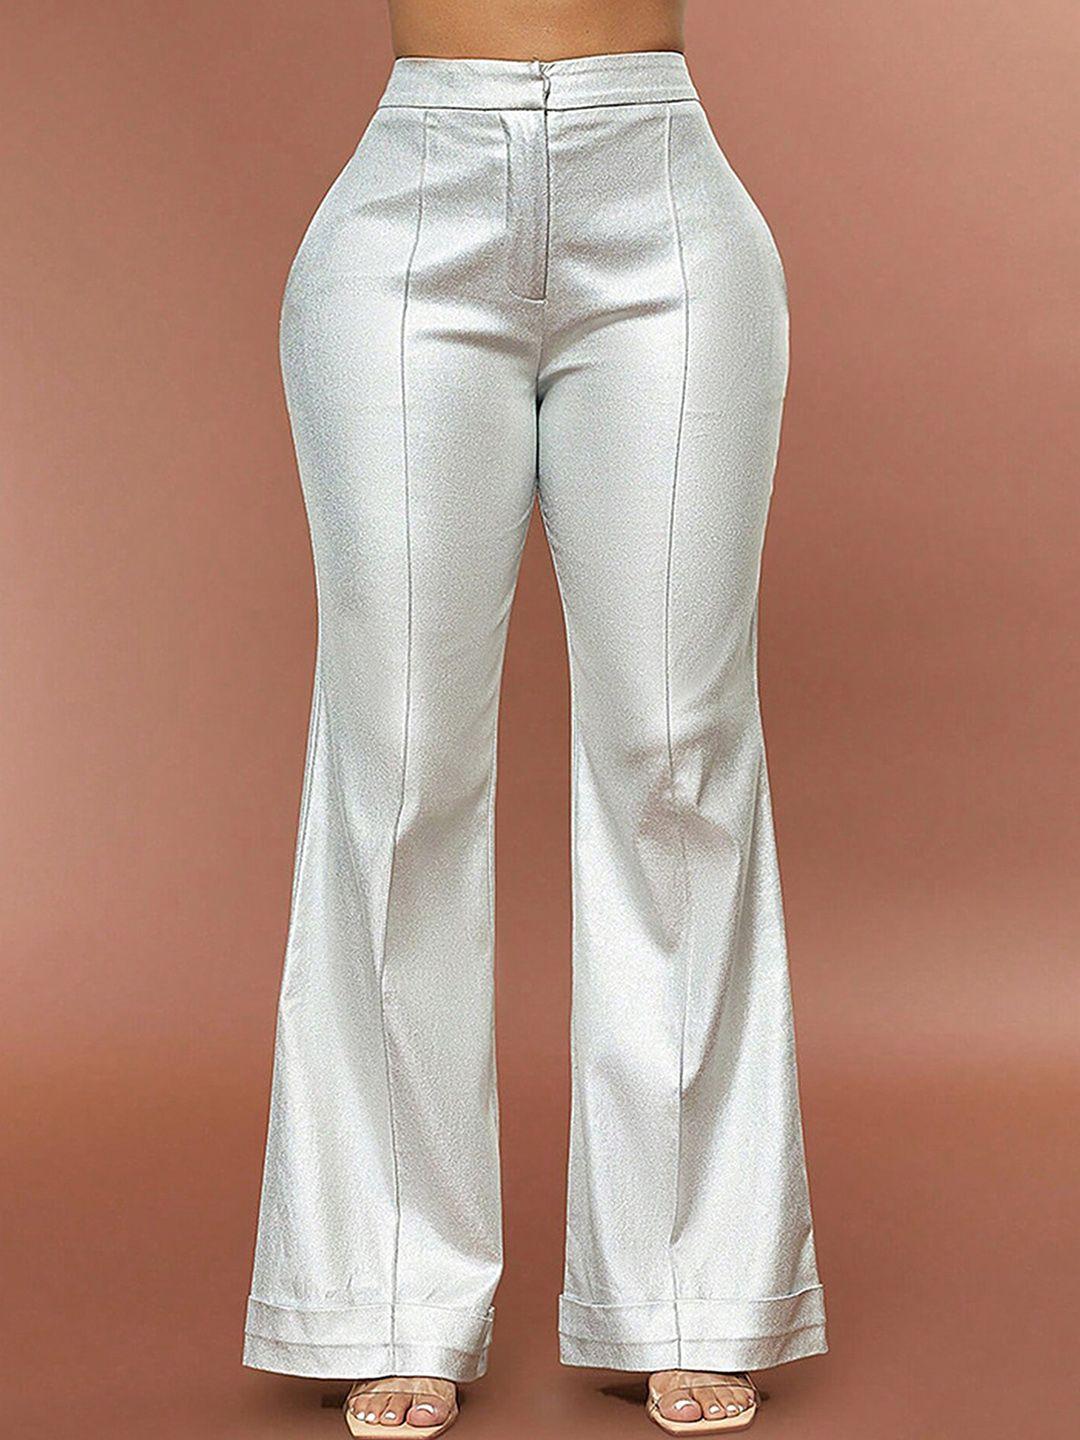 lulu & sky women silver-toned flared high-rise trousers